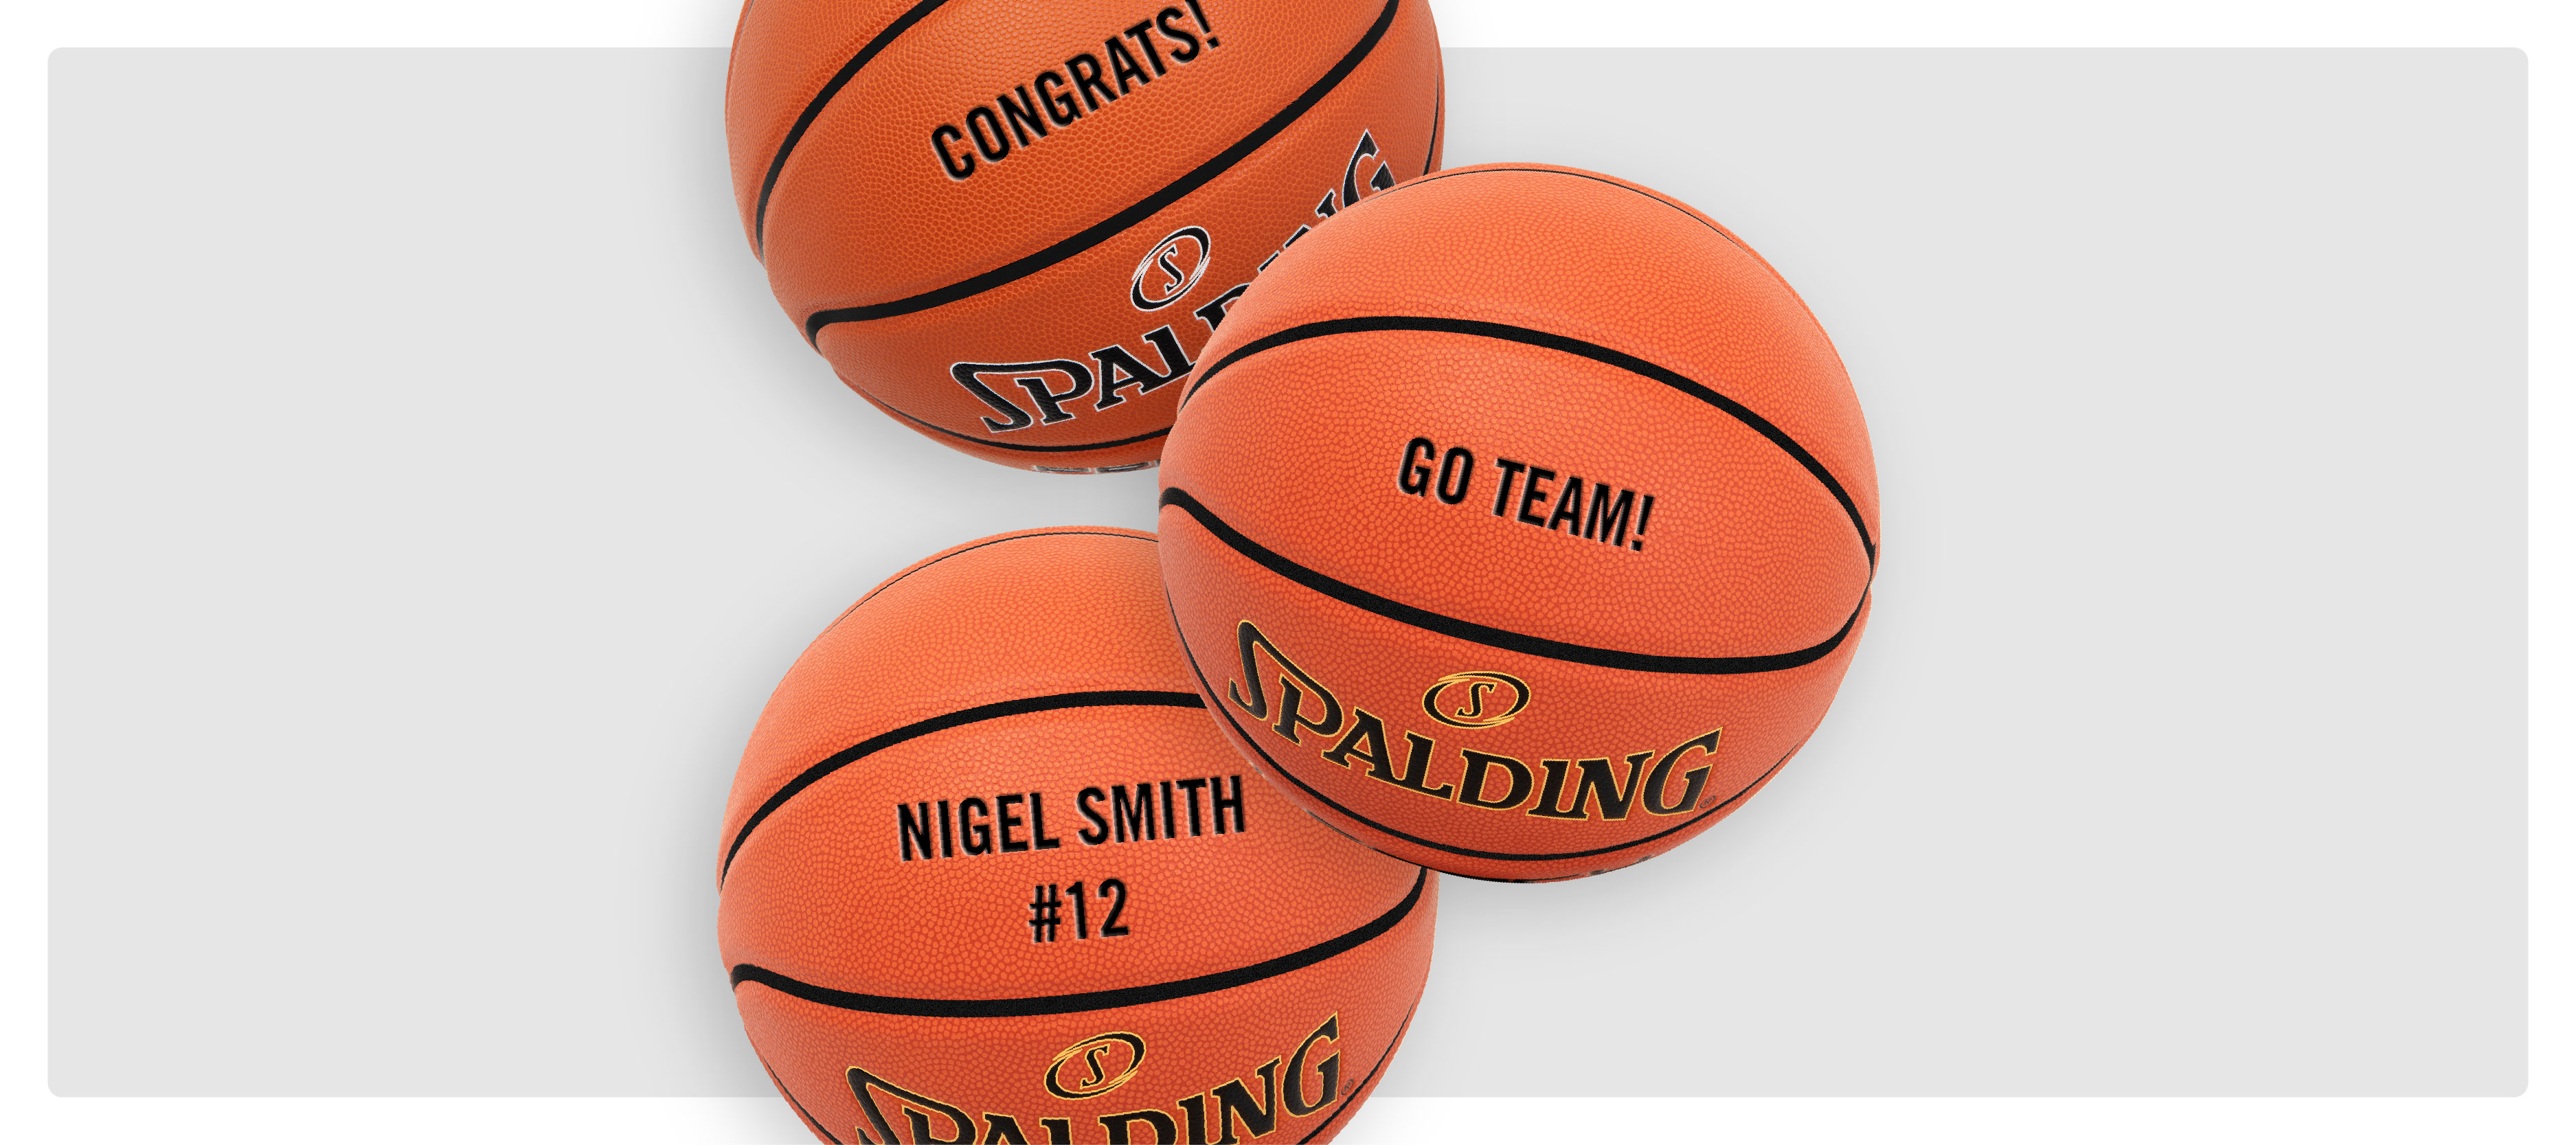 Basketballs, Custom and Personalized Basketballs